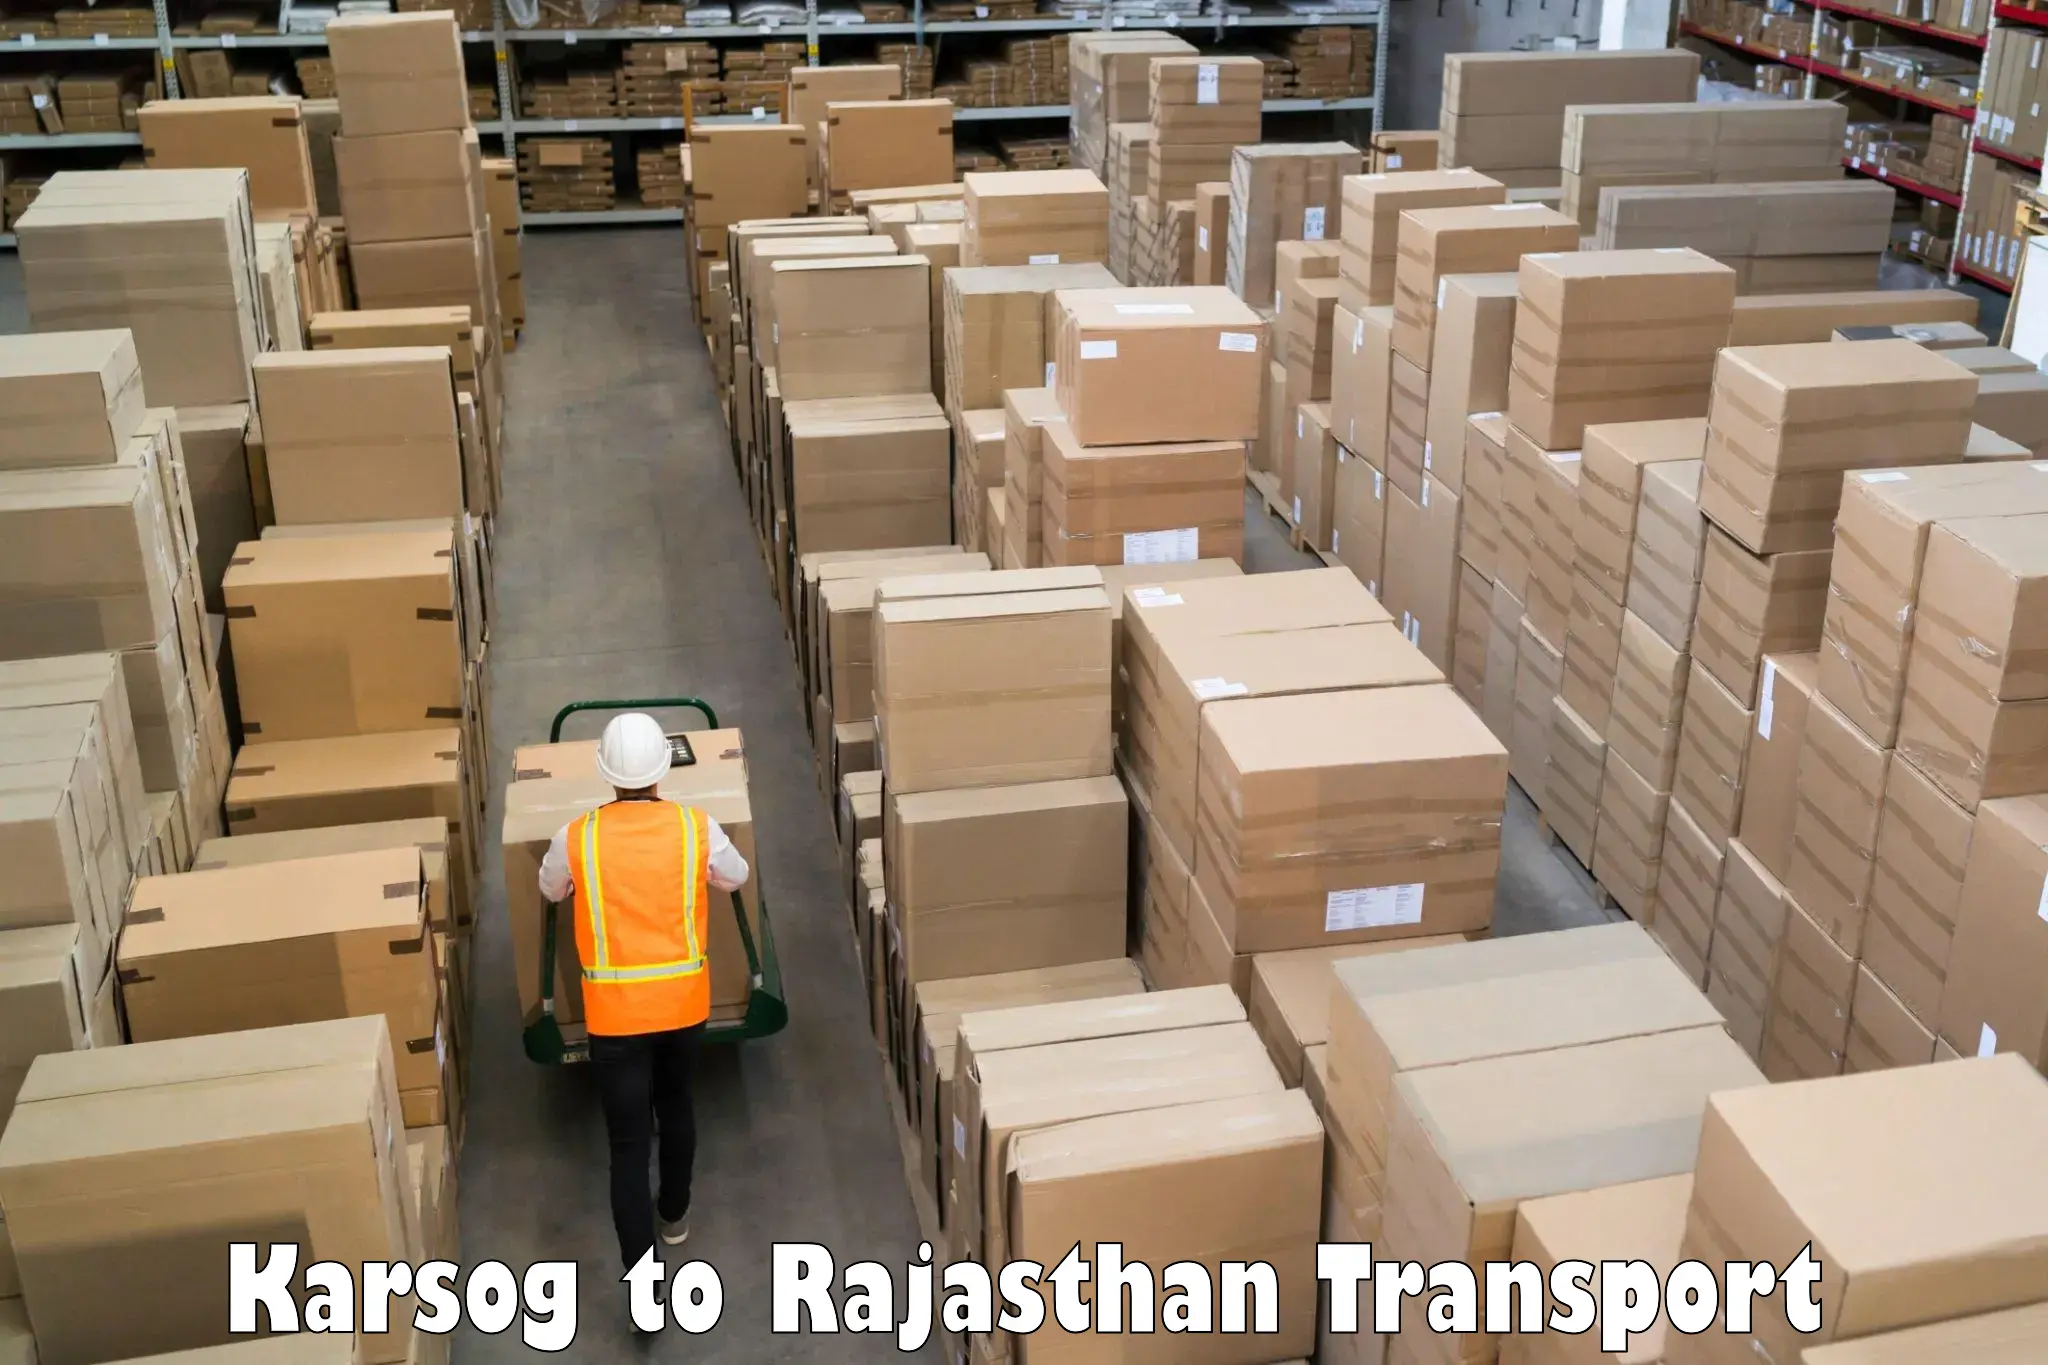 Truck transport companies in India Karsog to Jhunjhunu